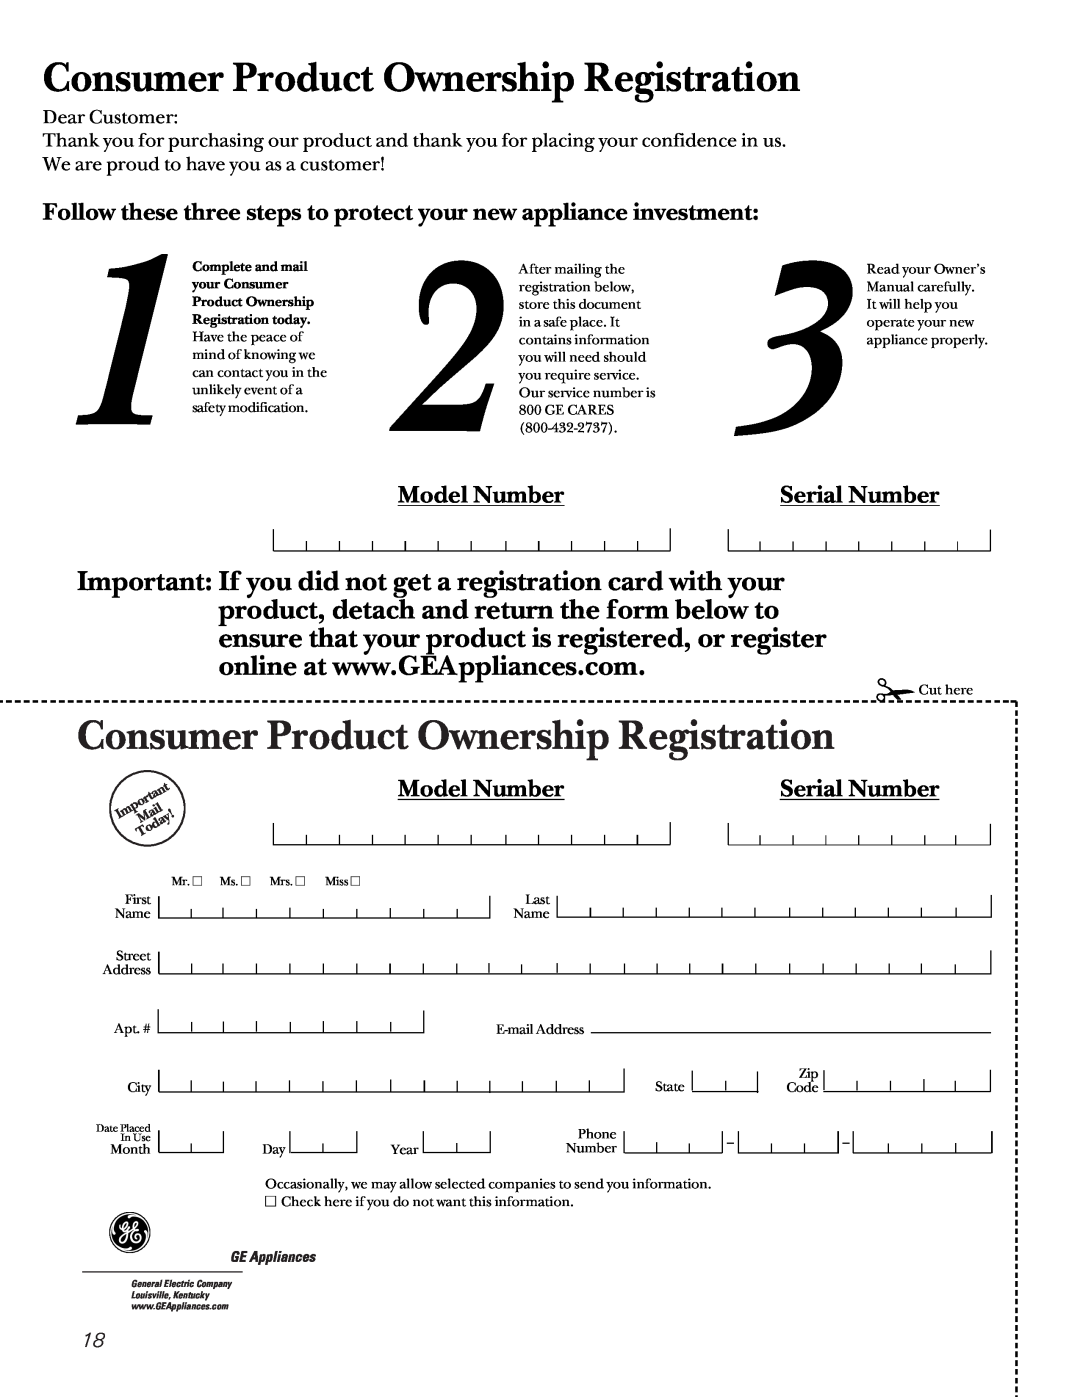 GE ASP12, ASV18, ASP24, ASM12, ASM14, ASM16, ASP18, ASP14 Model Number, Serial Number, Consumer Product Ownership Registration 